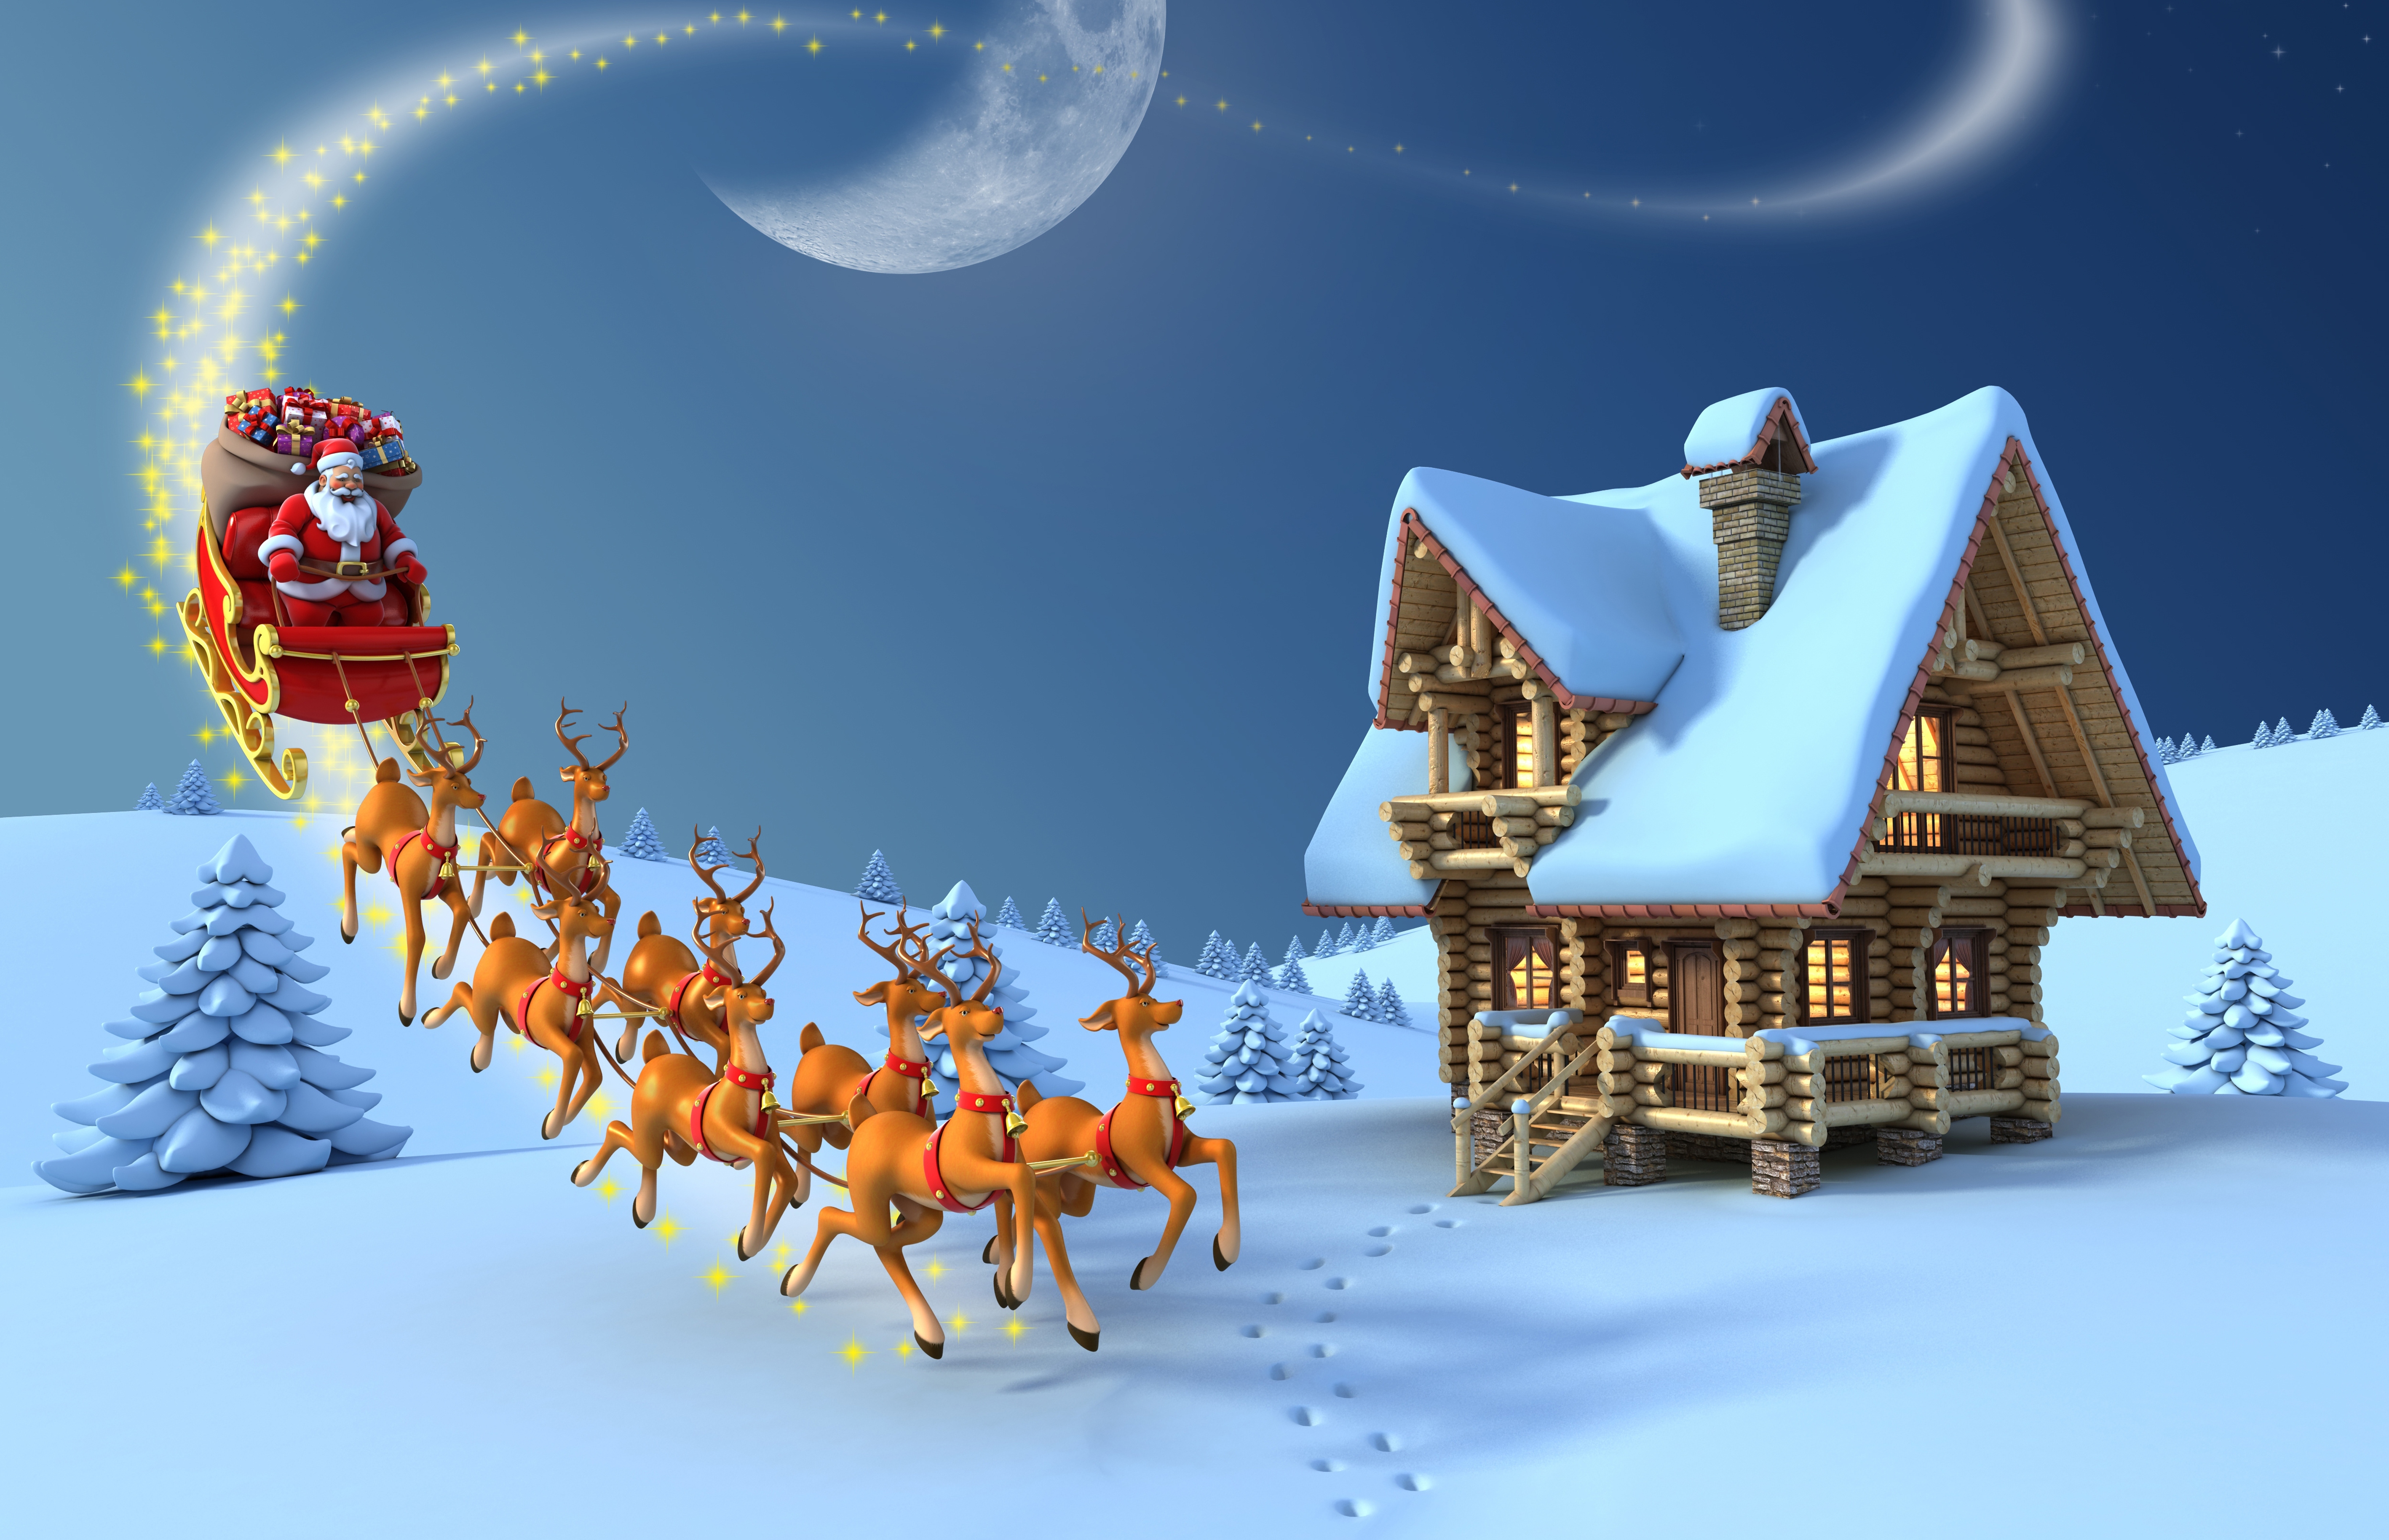 santa claus live wallpaper,santa claus,sled,winter,reindeer,christmas eve